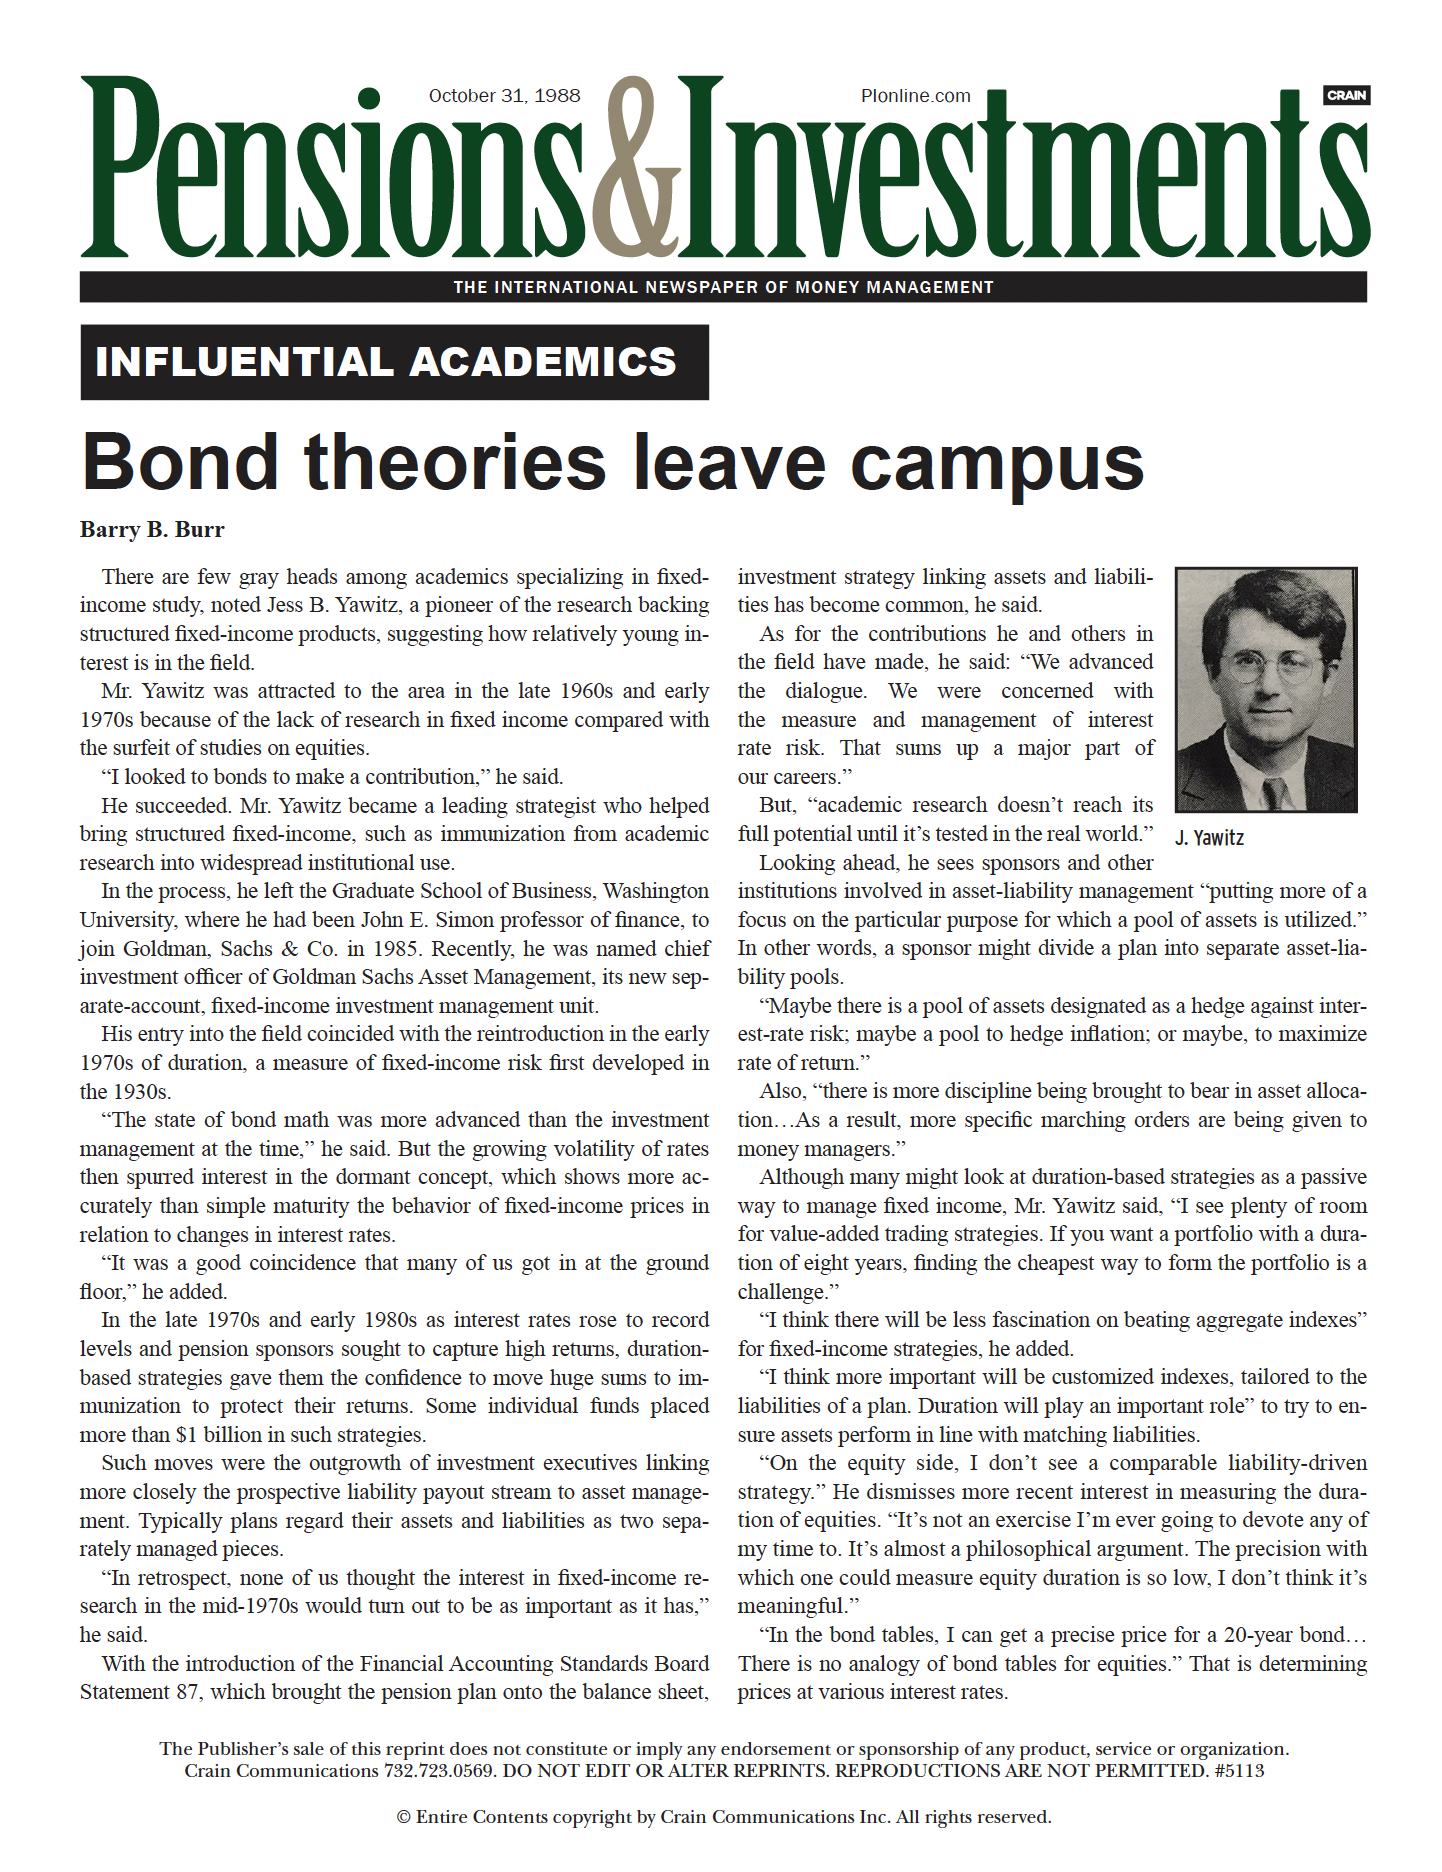 PI Bond Theories Leave Campus